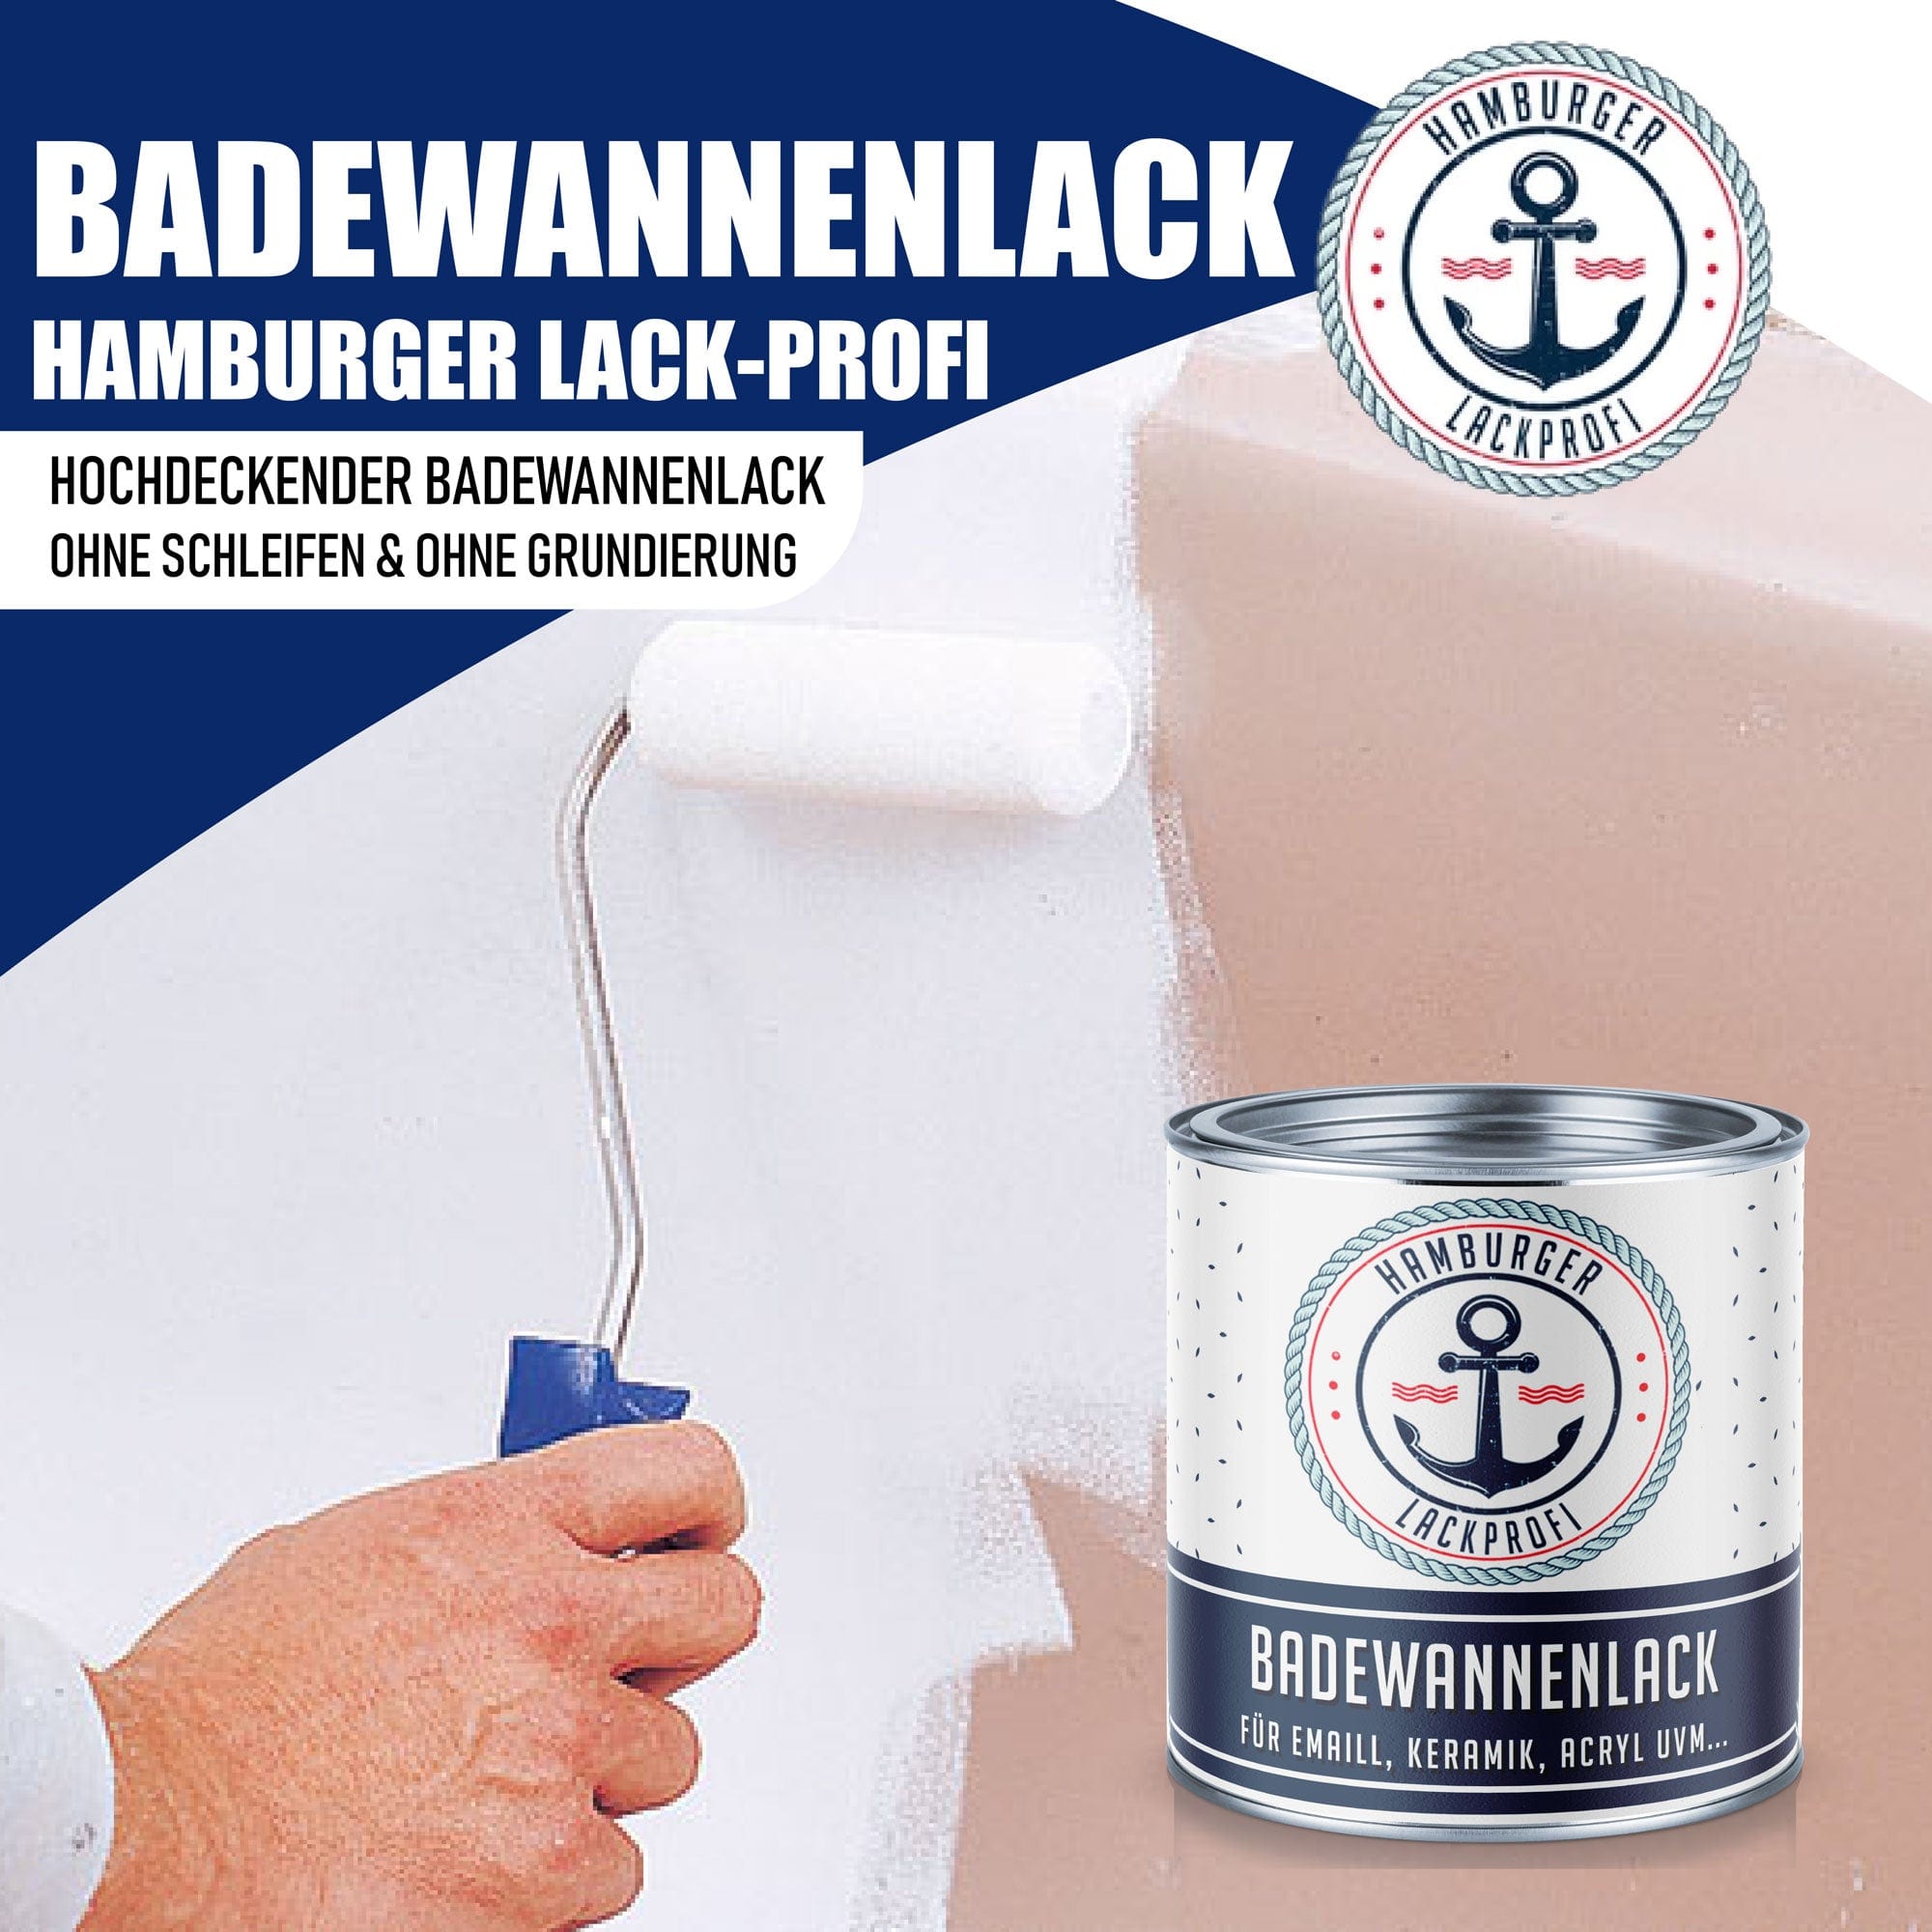 Hamburger Lack-Profi Badewannenlack Hamburger Lack-Profi 2K Badewannenlack Feuerrot RAL 3000 - Glänzend / Seidenmatt / Matt